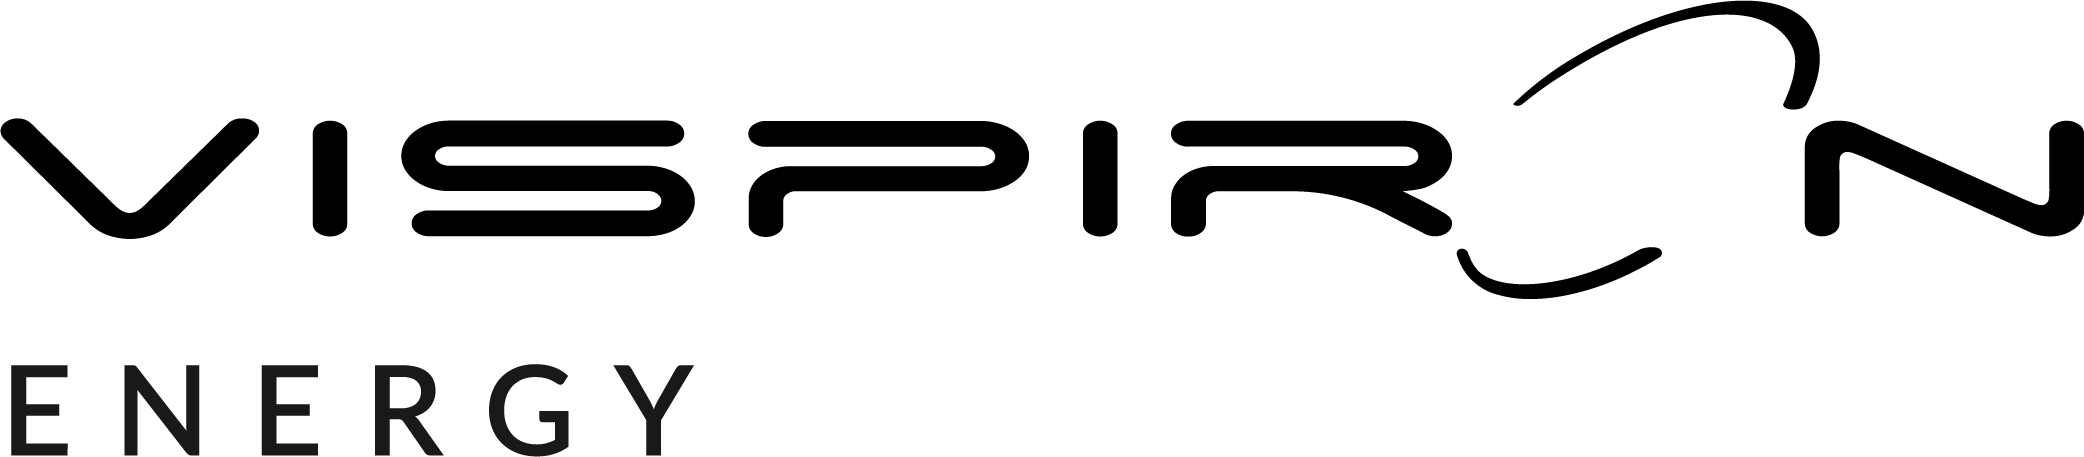 Vispiron-Energy_logo_black